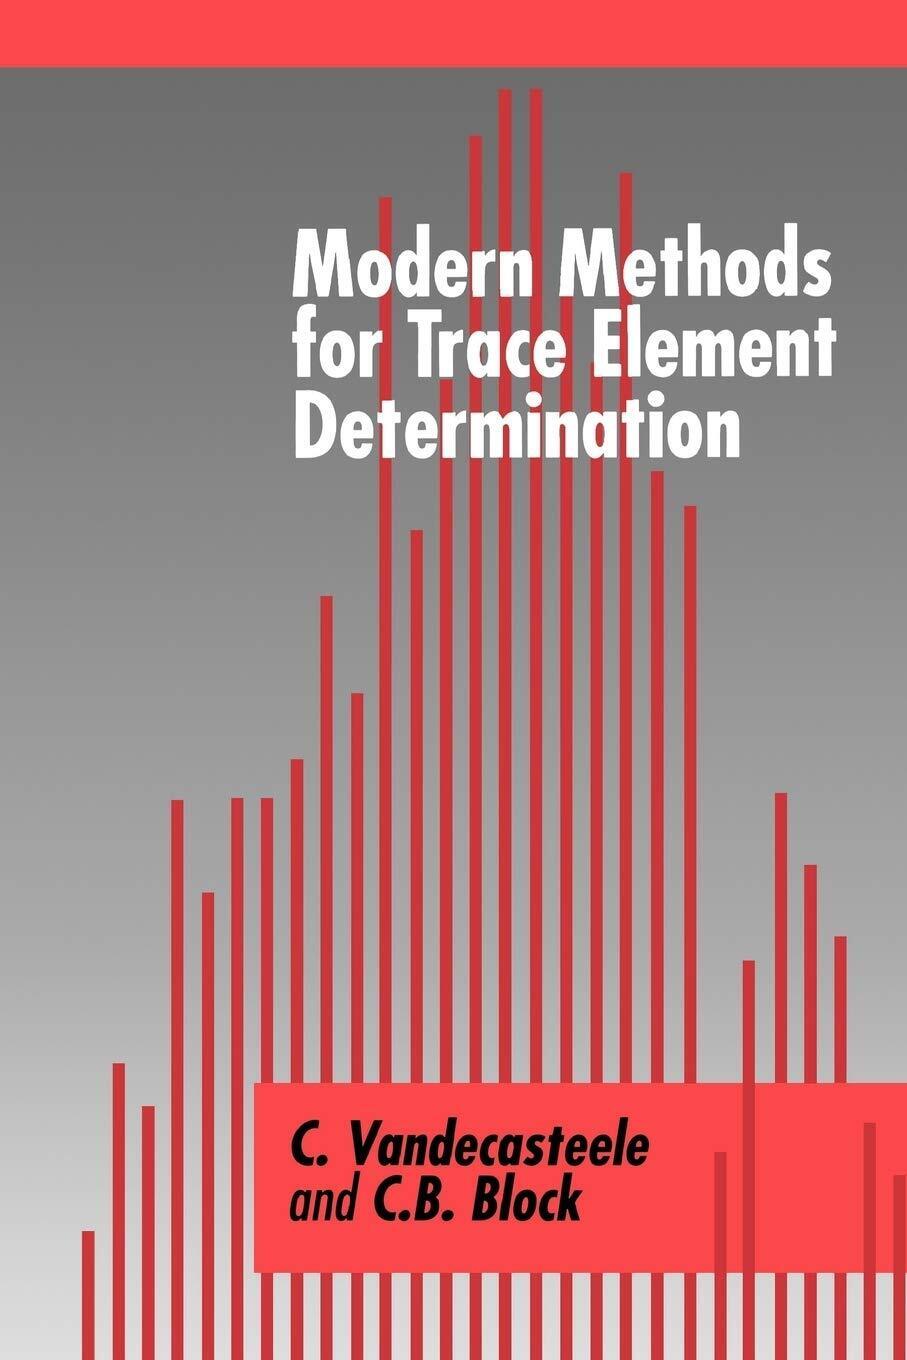 Modern Methods for Trace Element Determ - Vandecasteele, Block - 1997 libro usato